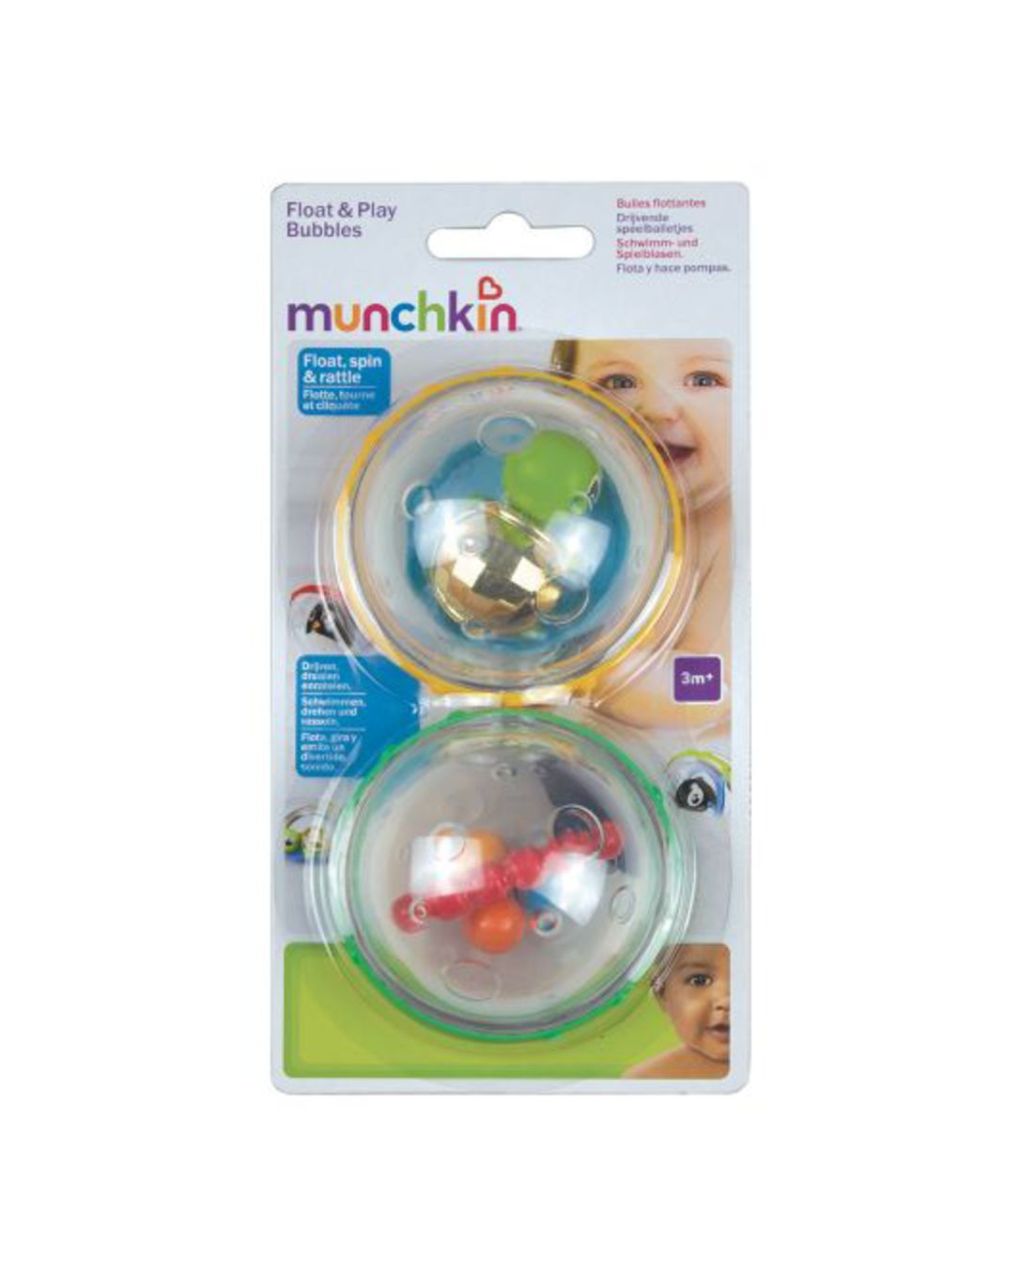 Munchkin 2 float and play bubbles - Munchkin